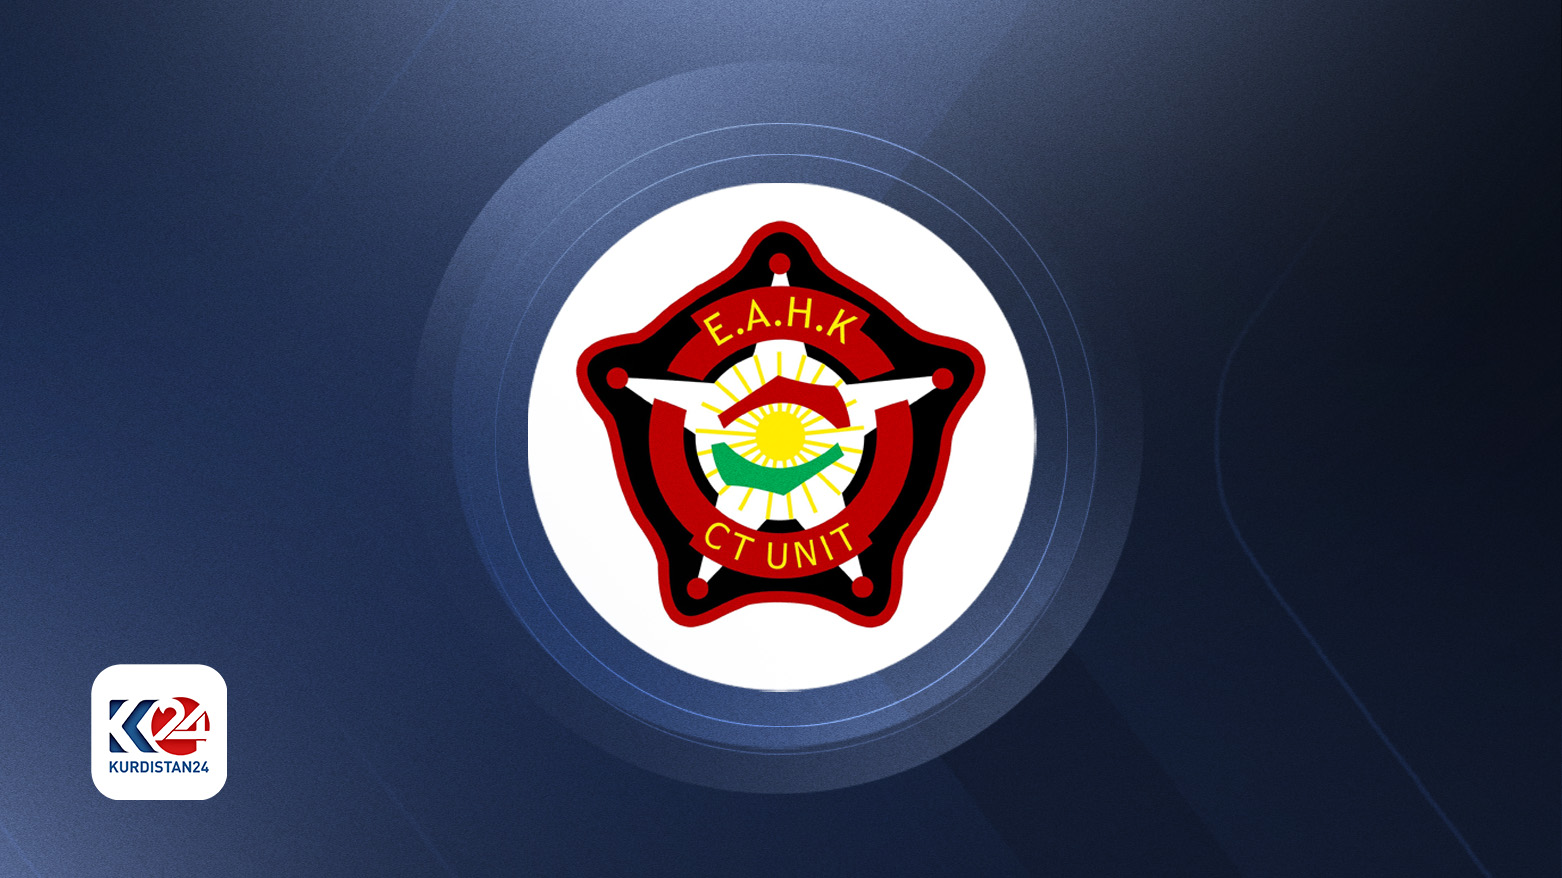 The logo of the Kurdistan Region Directorate General of Counter-Terrorism (CTD). (Photo: Designed by Kurdistan 24)